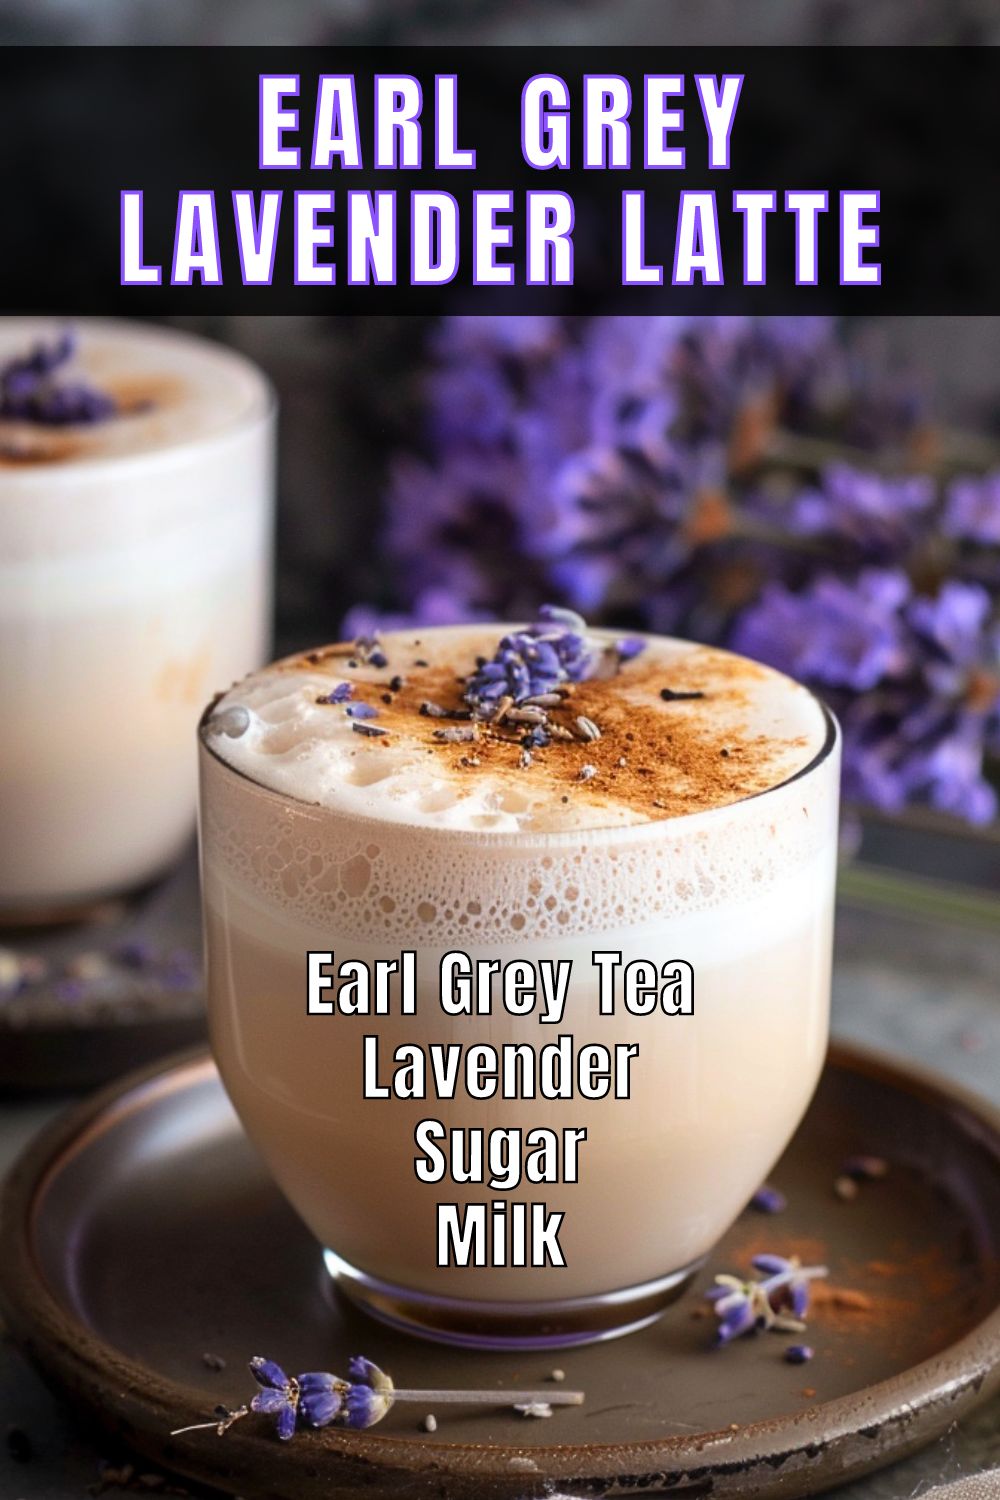 Earl Grey Lavender Latte